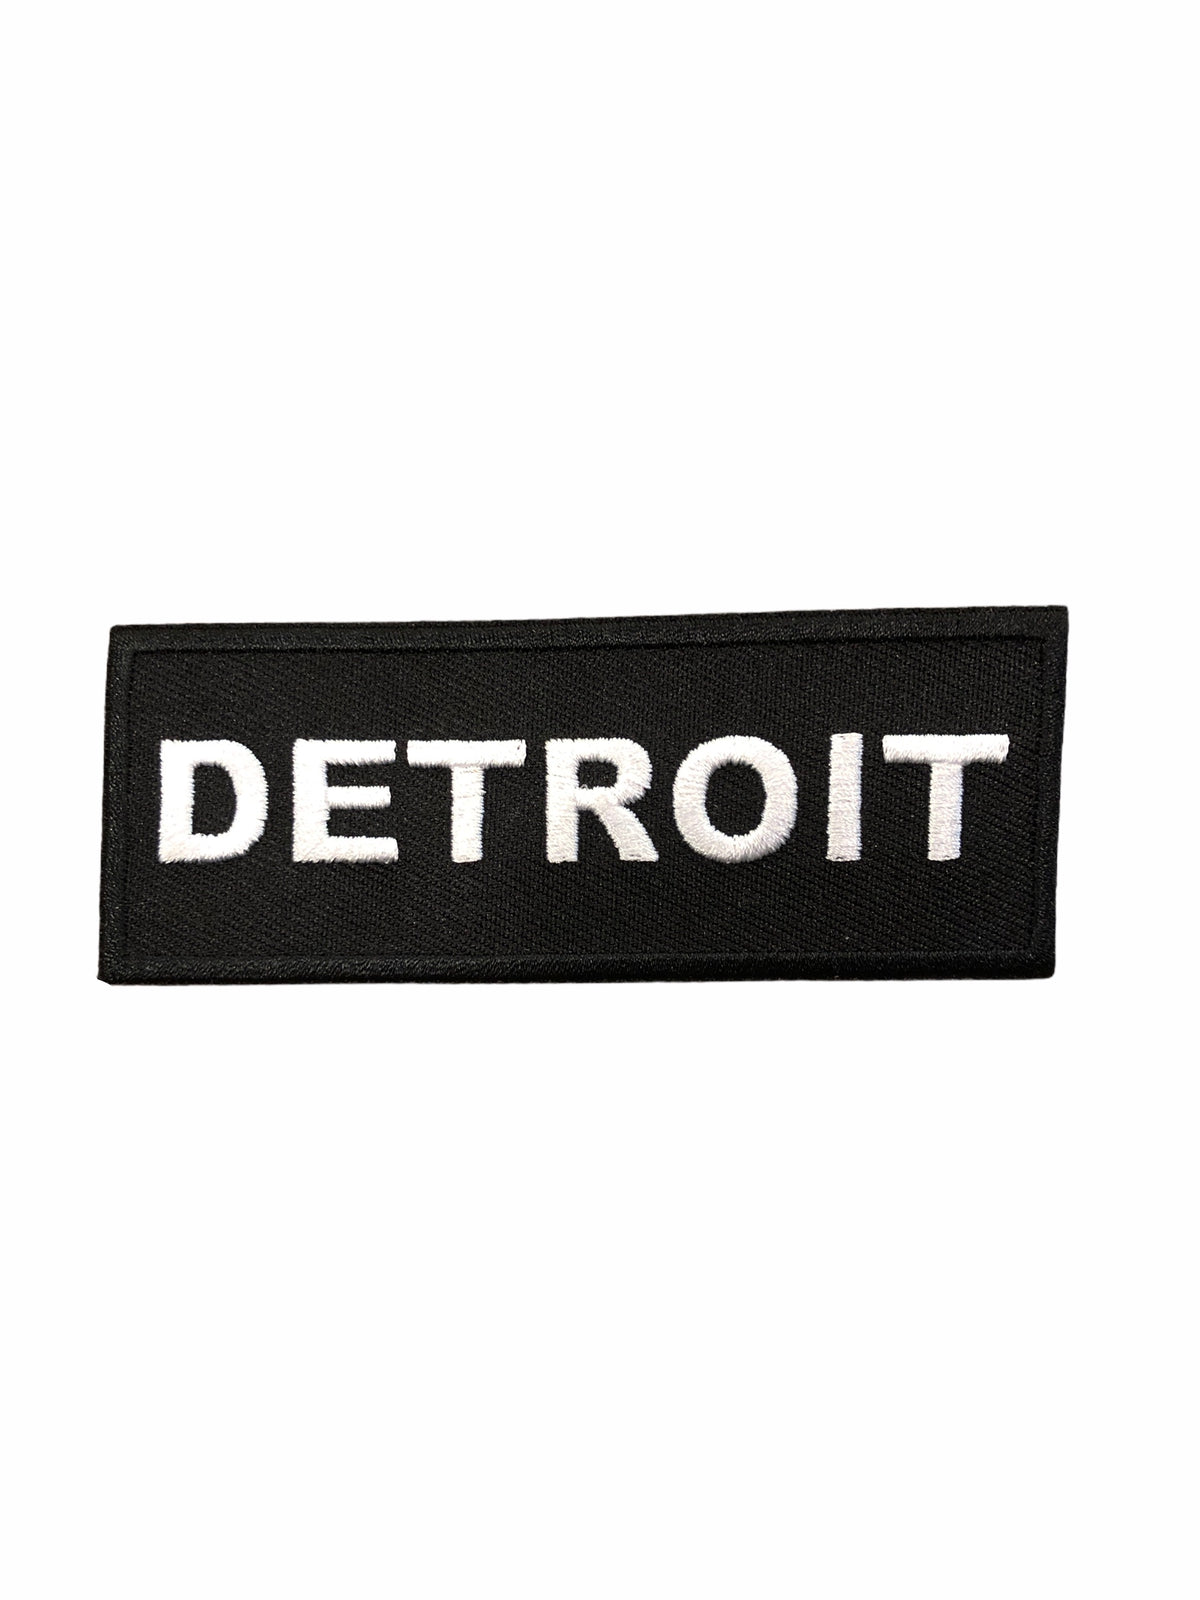 Detroit Premium Sew-on Patch Patch   